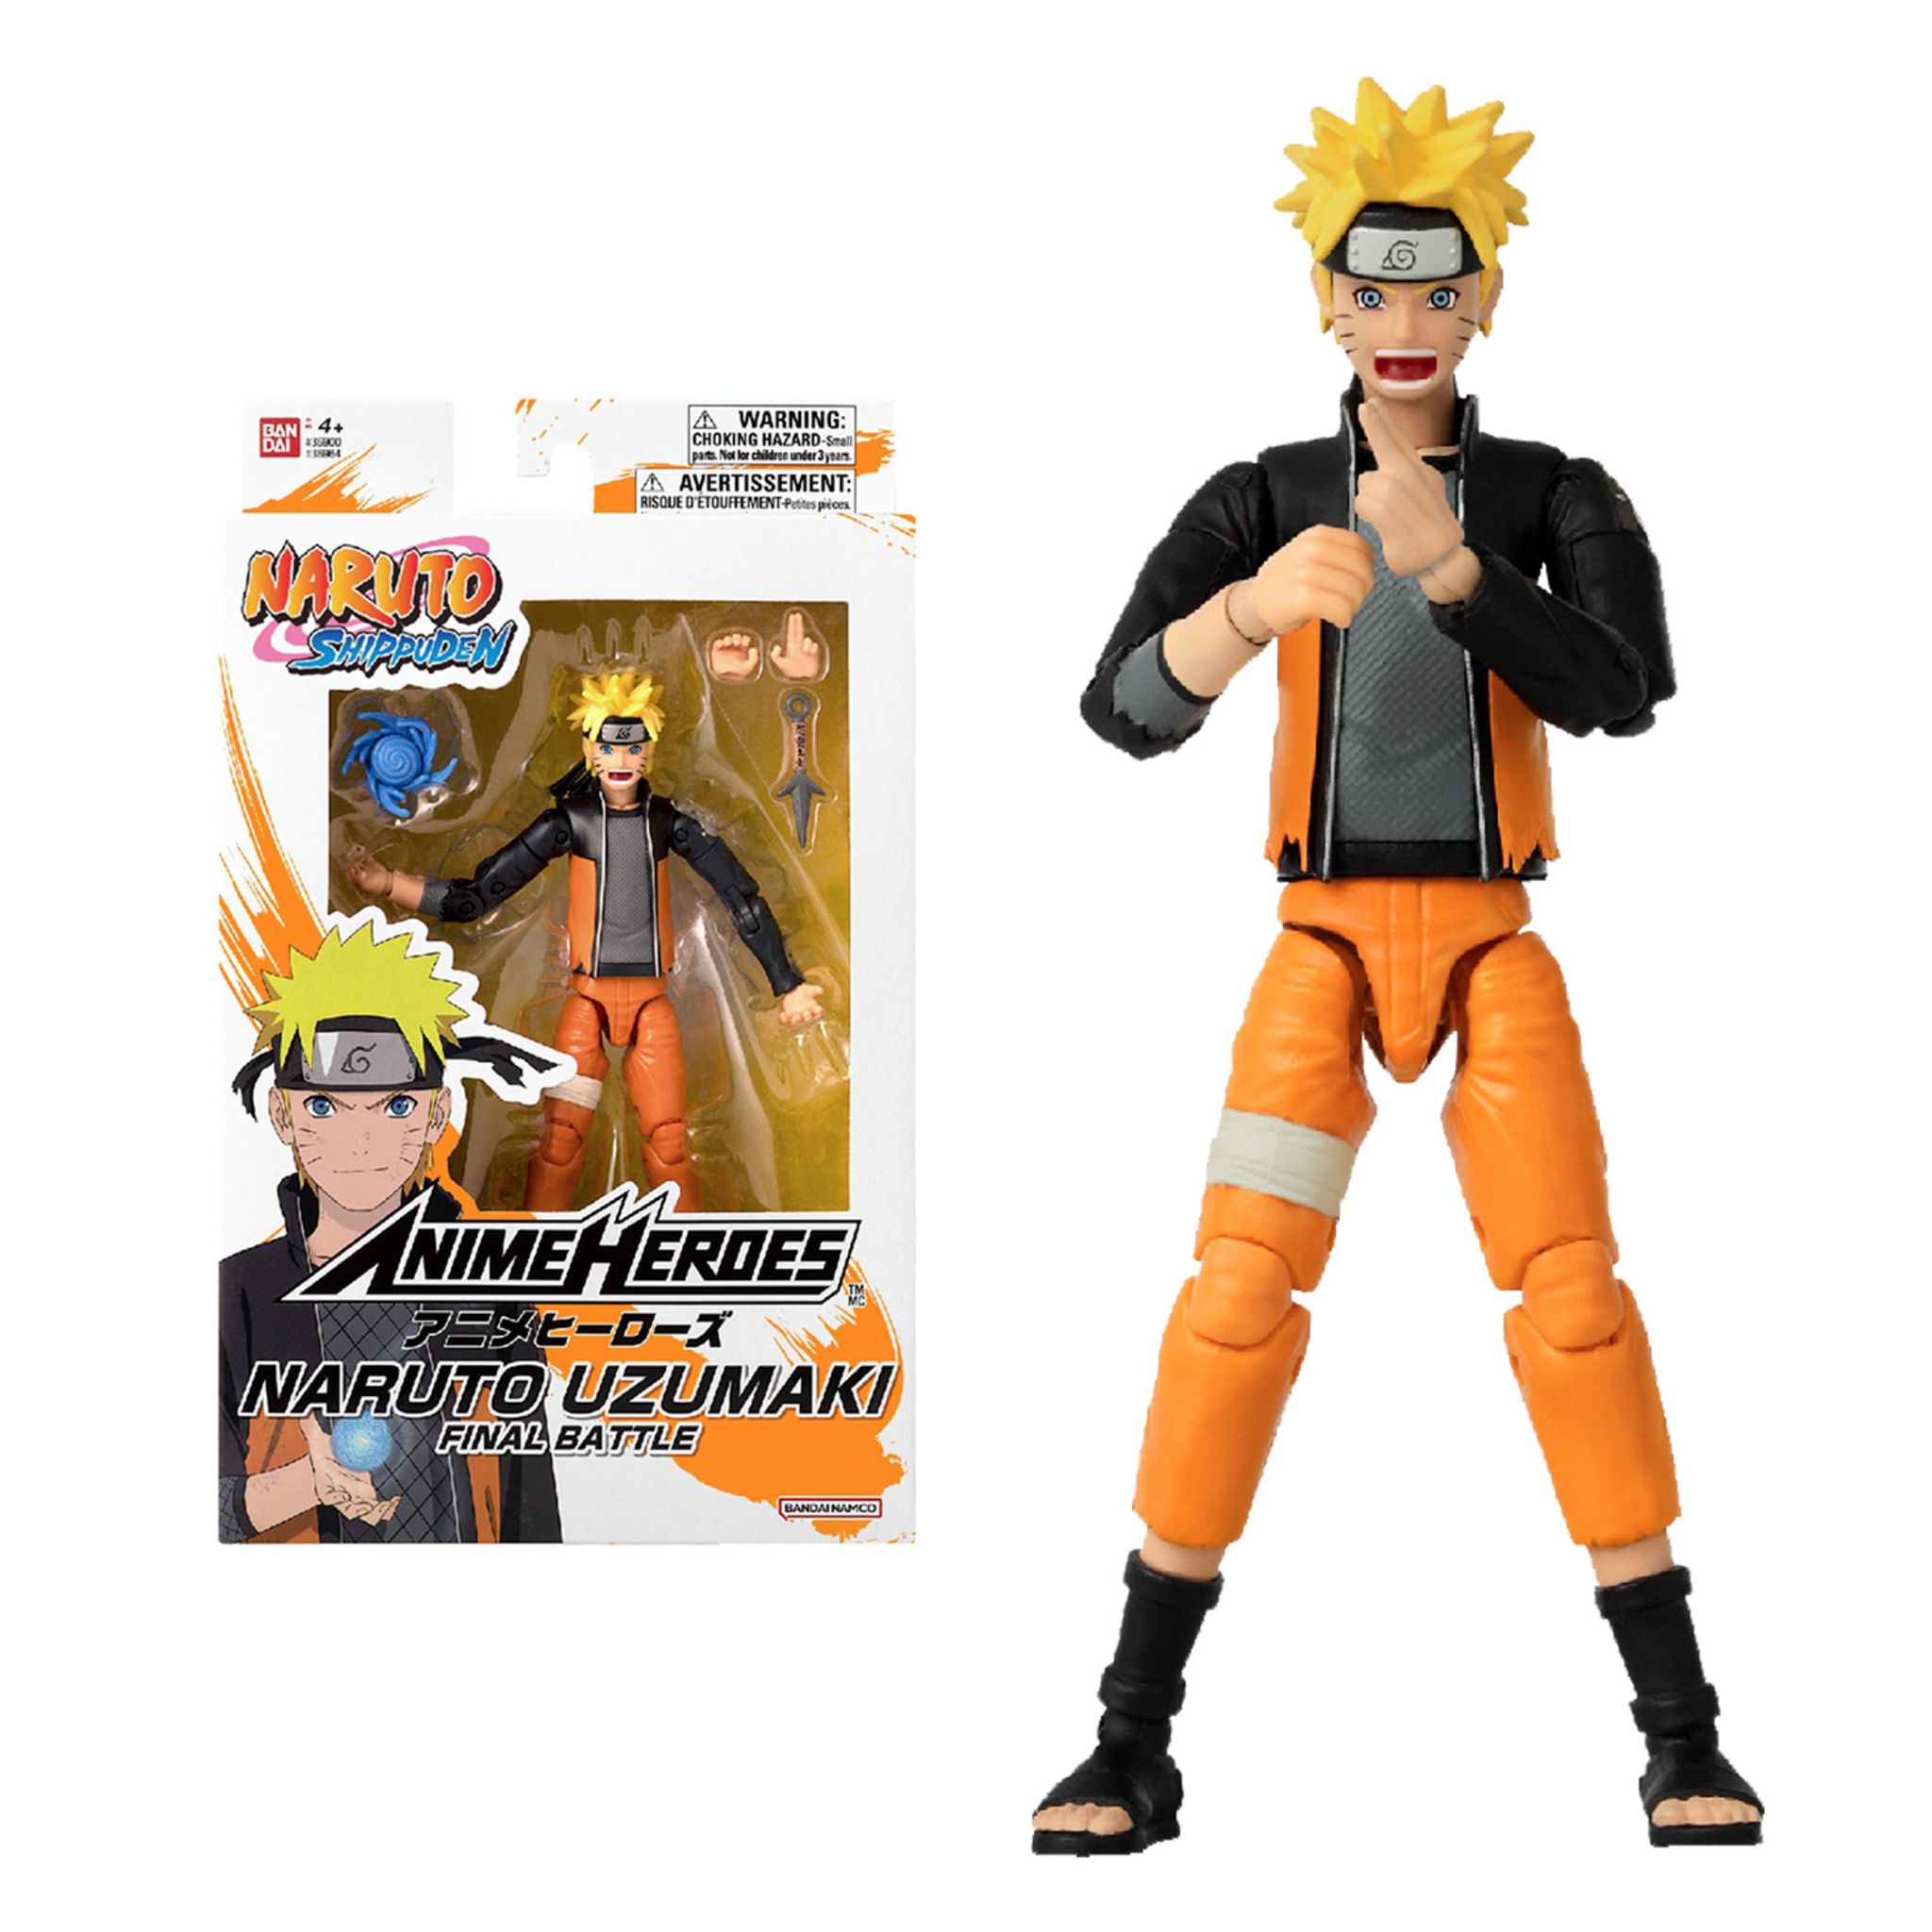 BANDAI Figurine Naruto Final Battle - Anime Heroes 17cm pas cher 